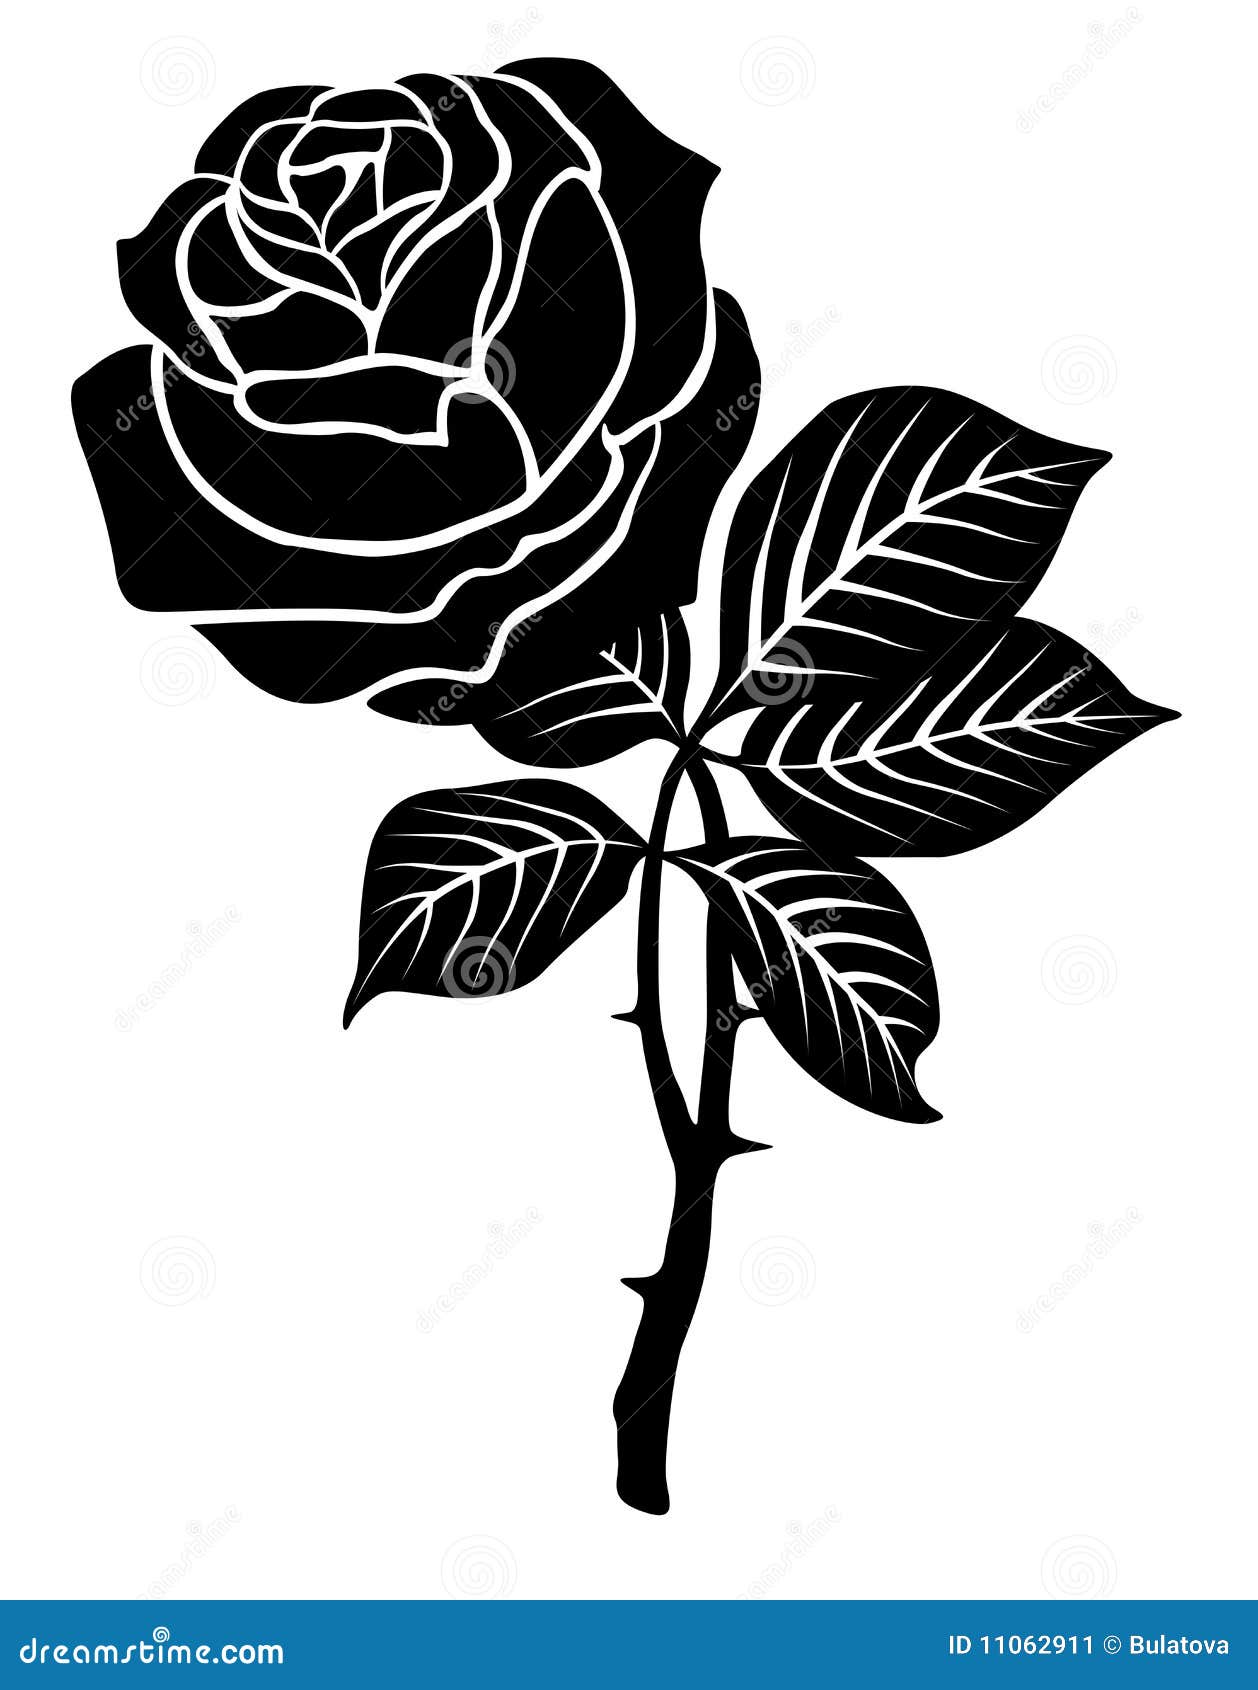 Black rose stock vector. Illustration of nature, elegance - 11062911